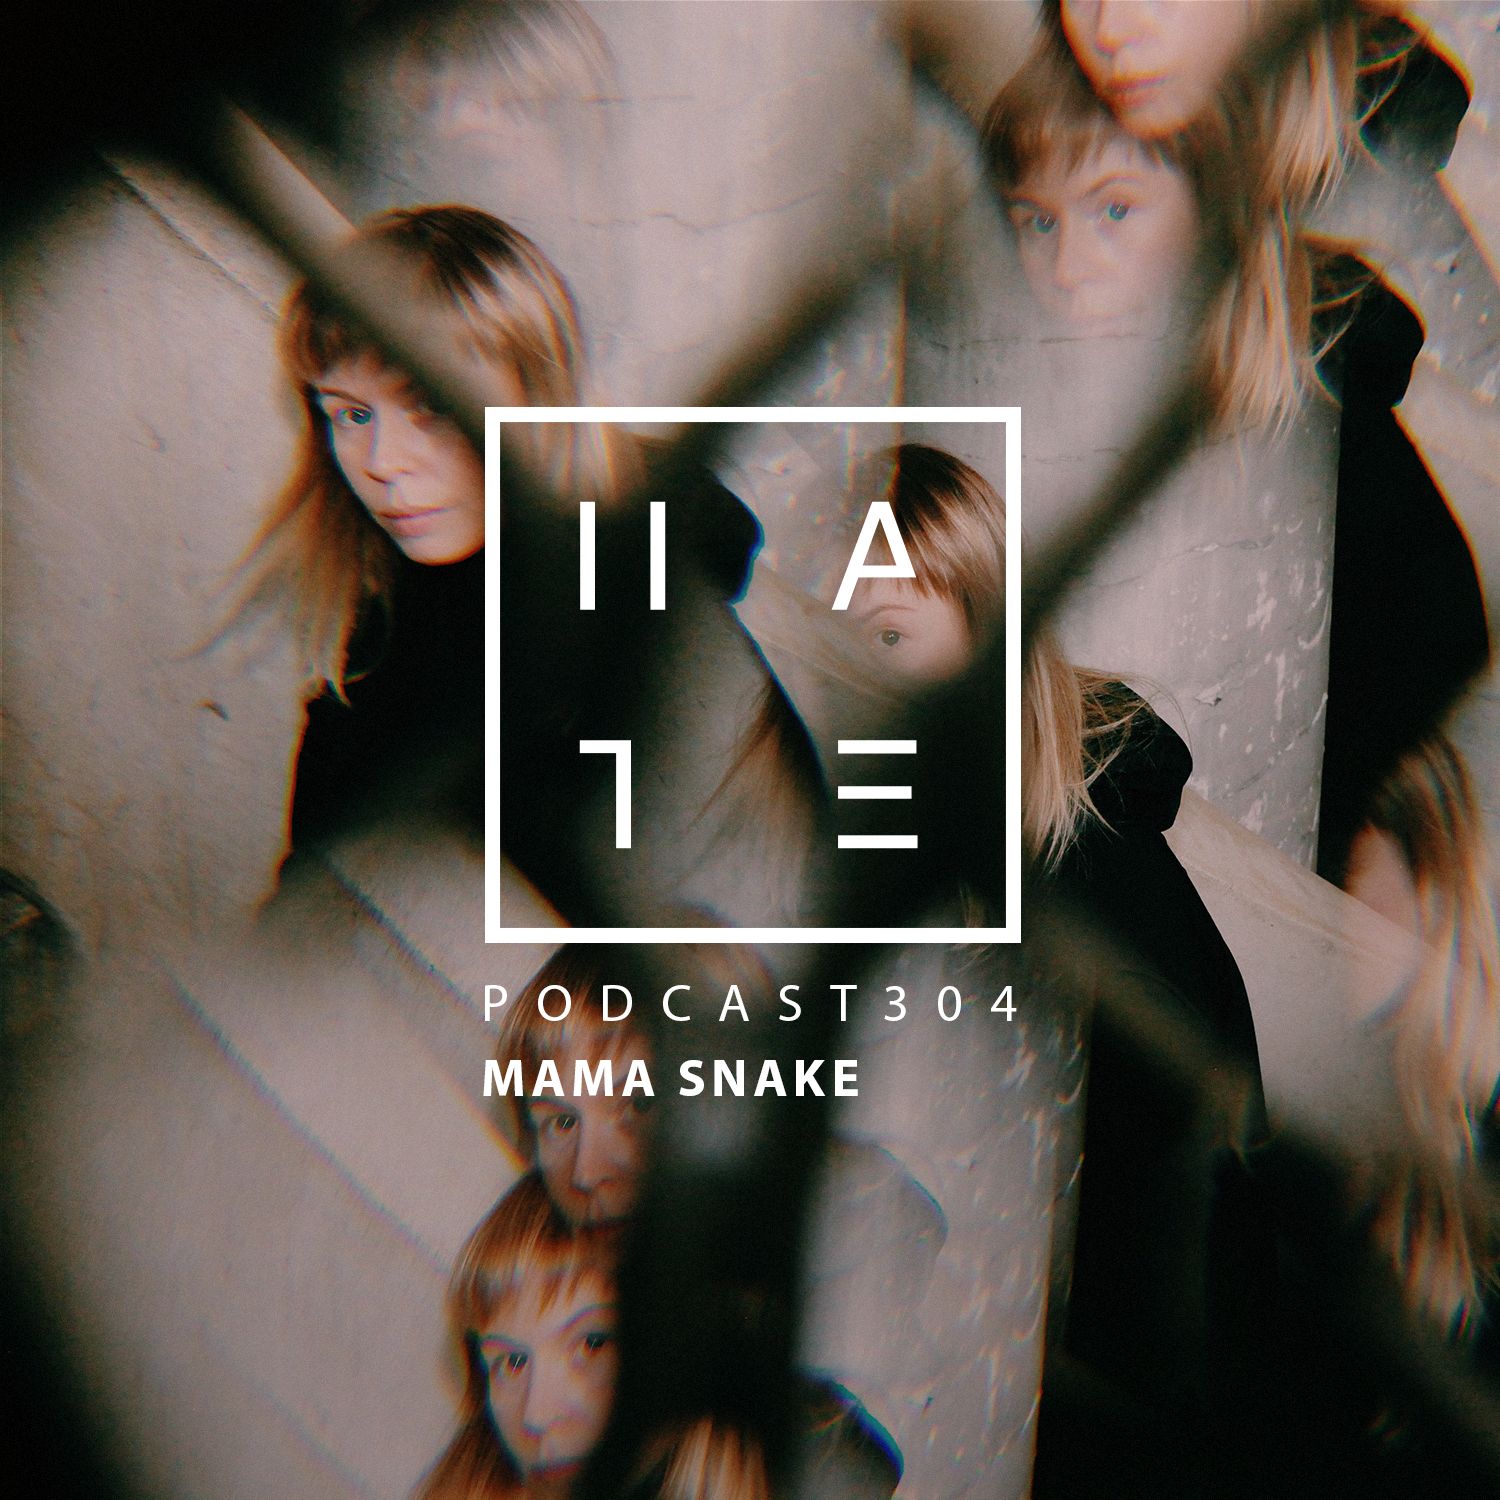 डाउनलोड करा Mama Snake - HATE Podcast 304